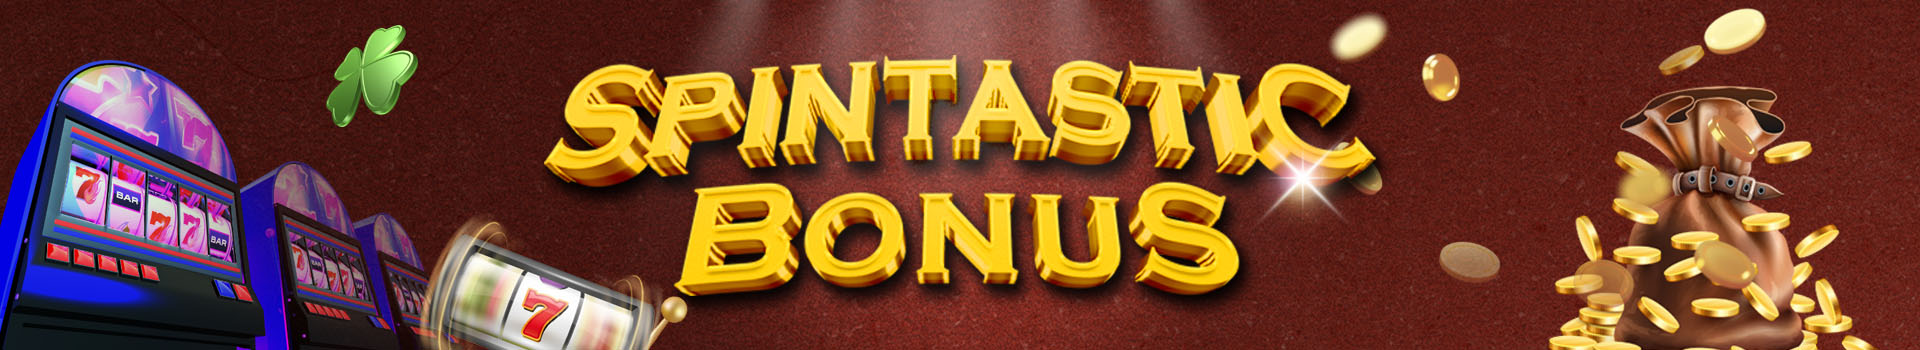 Spintastic Bonus Banner